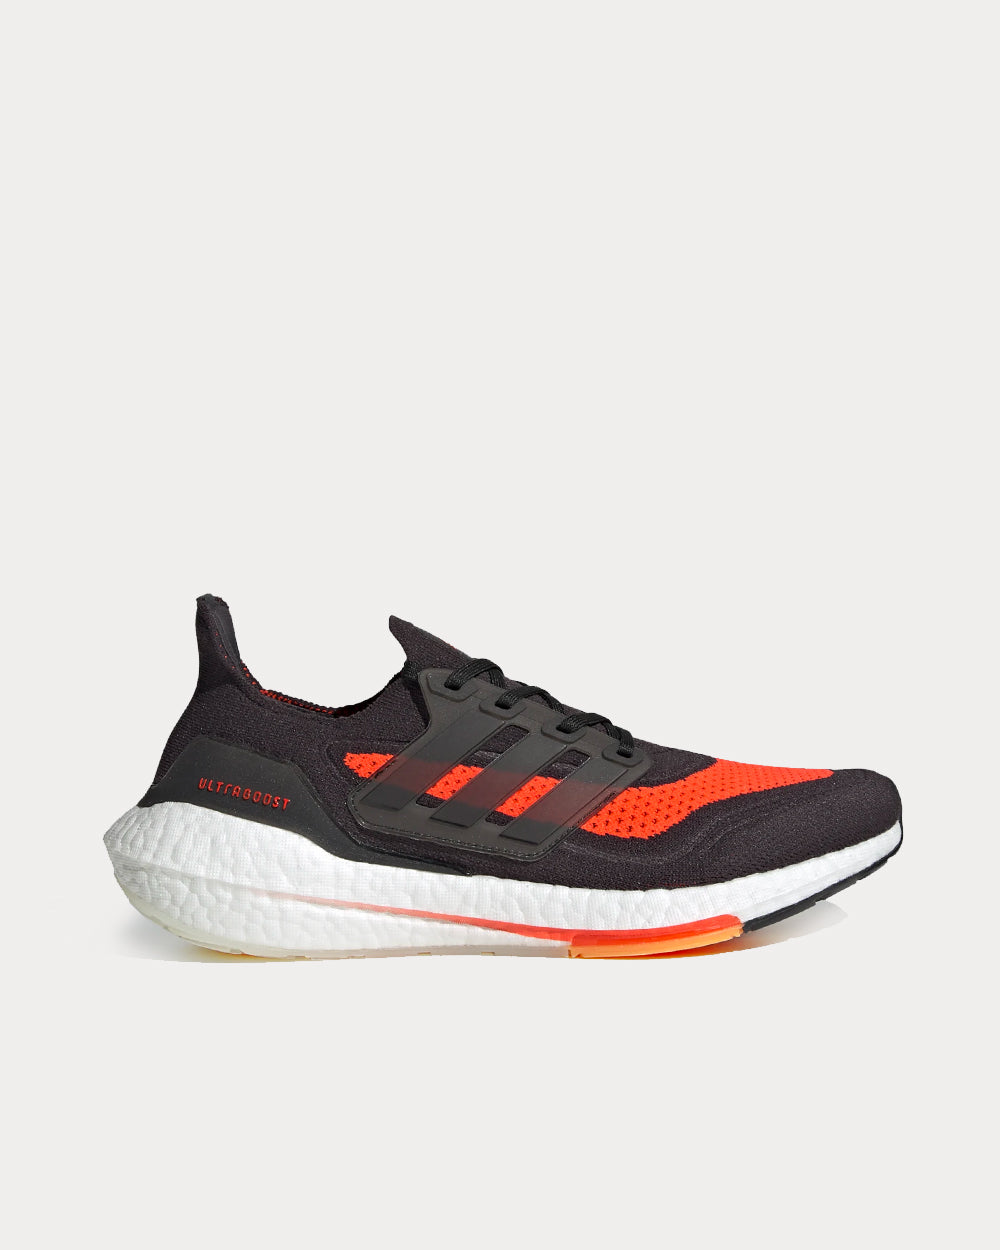 Adidas Ultraboost Slip-On DNA Core Black Running Shoes - Sneak in